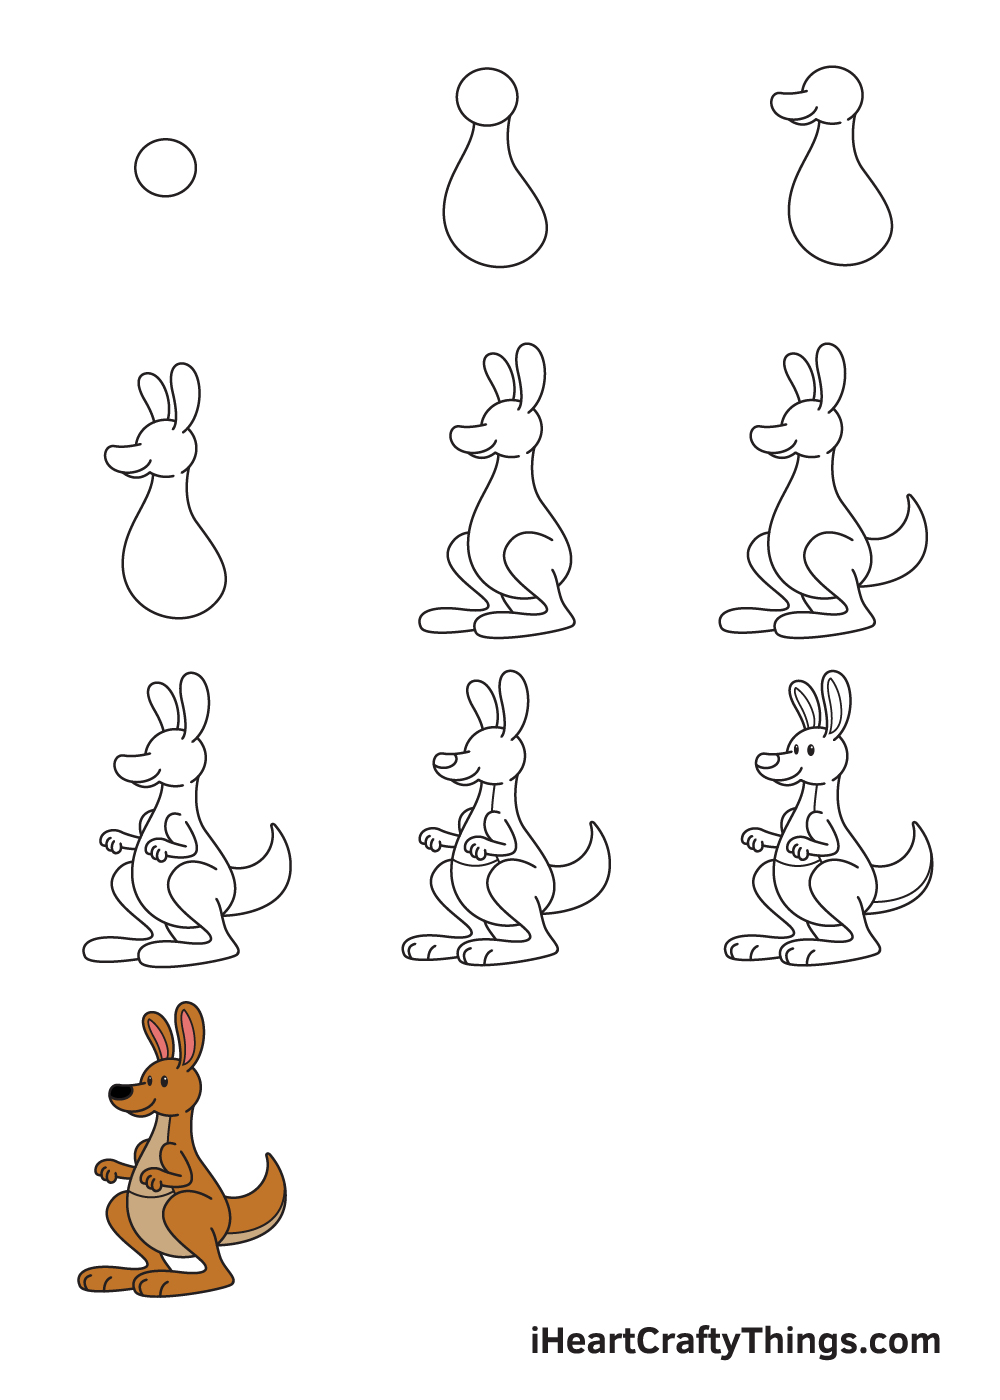 Kangaroo Drawing How To Draw A Kangaroo Step By Step